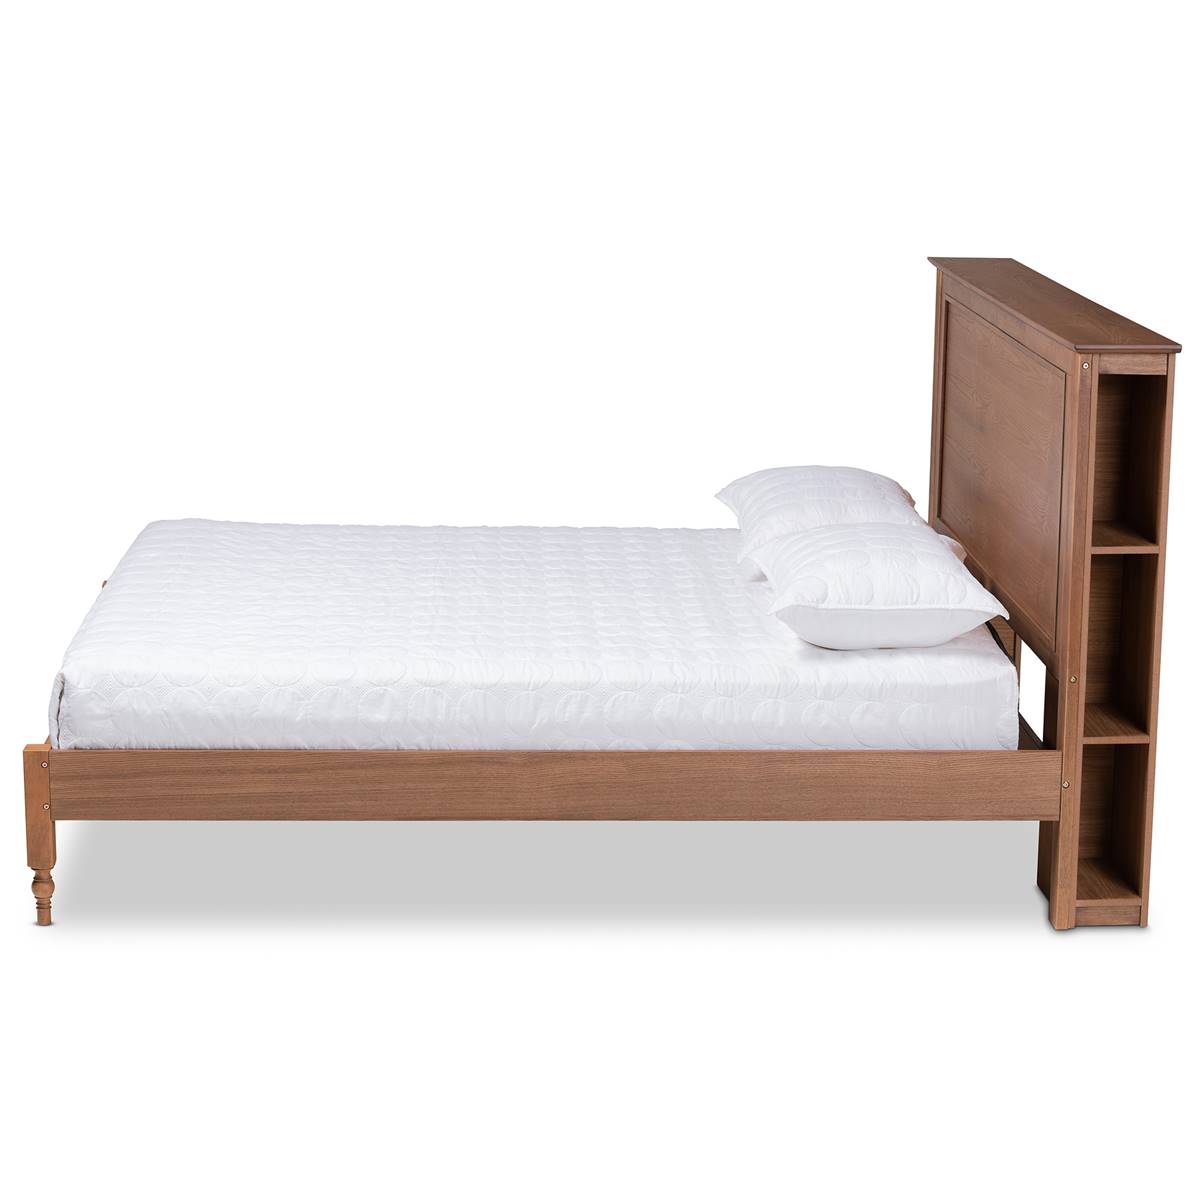 Baxton Studio Danielle Full Size Platform Bed With Shelves